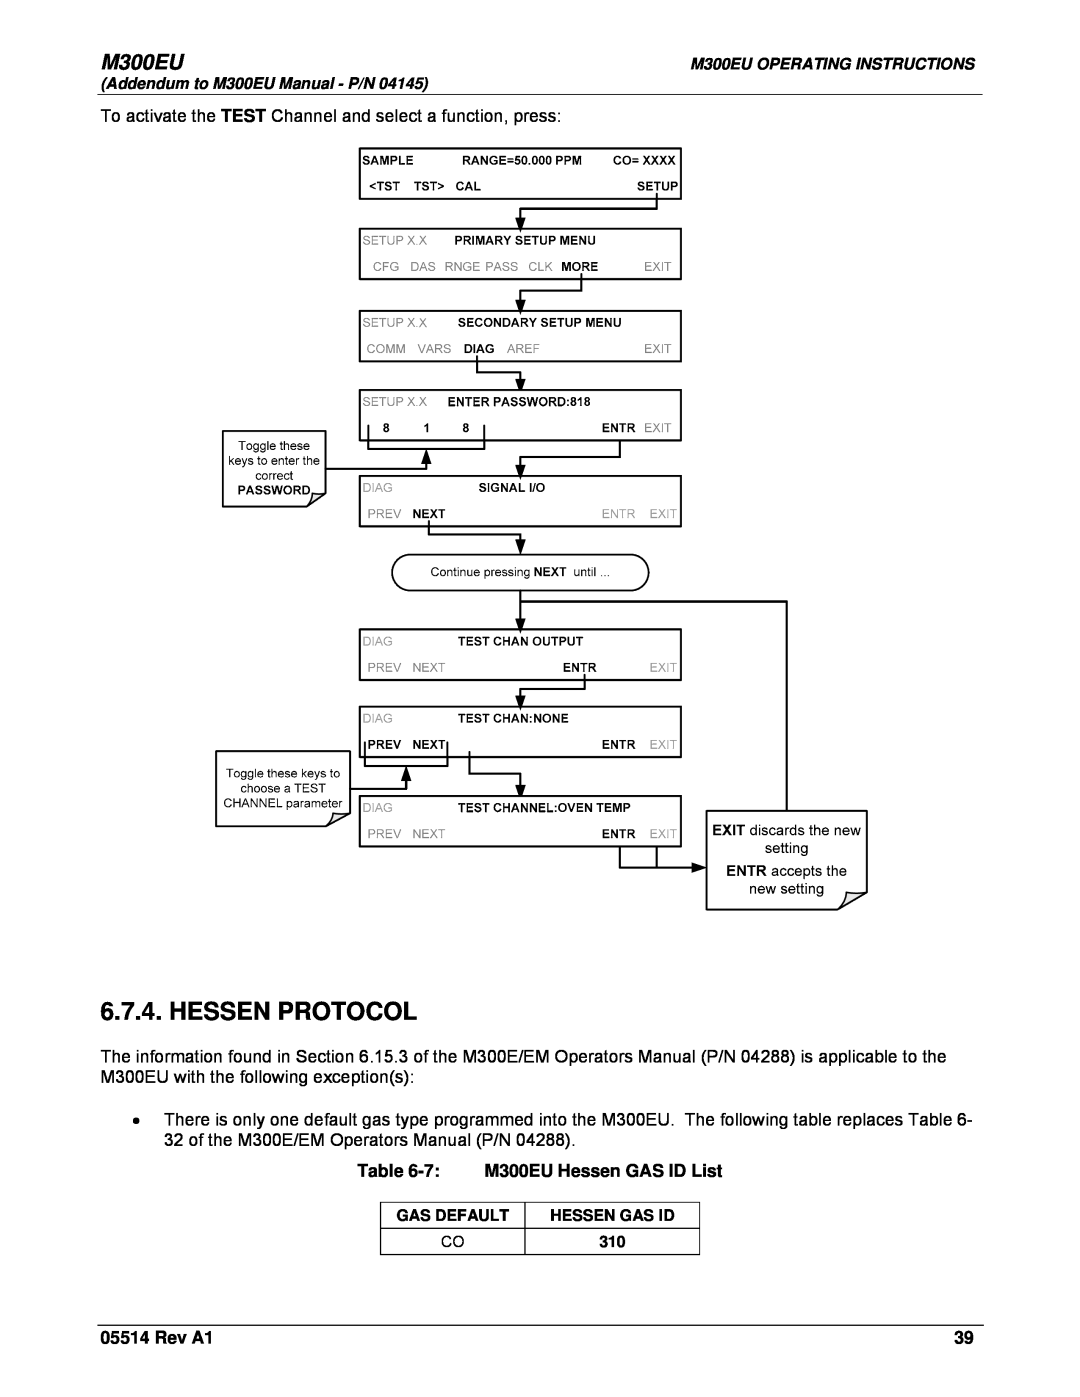 Teledyne Model 300EU manual Hessen Protocol, 7 M300EU Hessen GAS ID List, Rev A1 